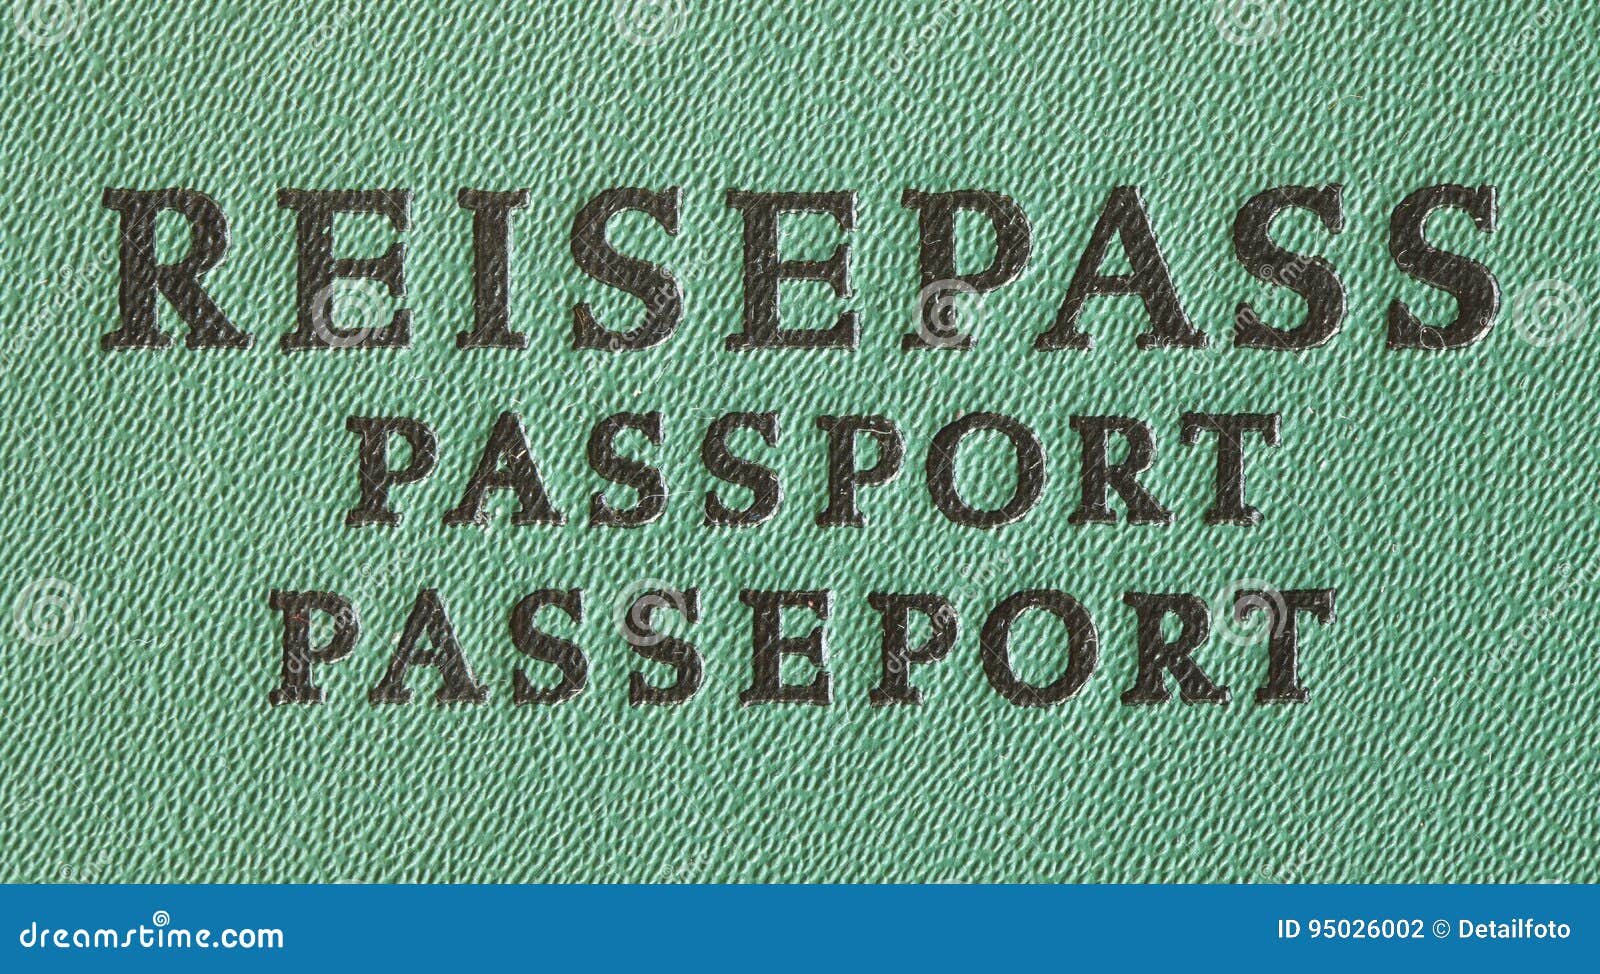 german travel passport